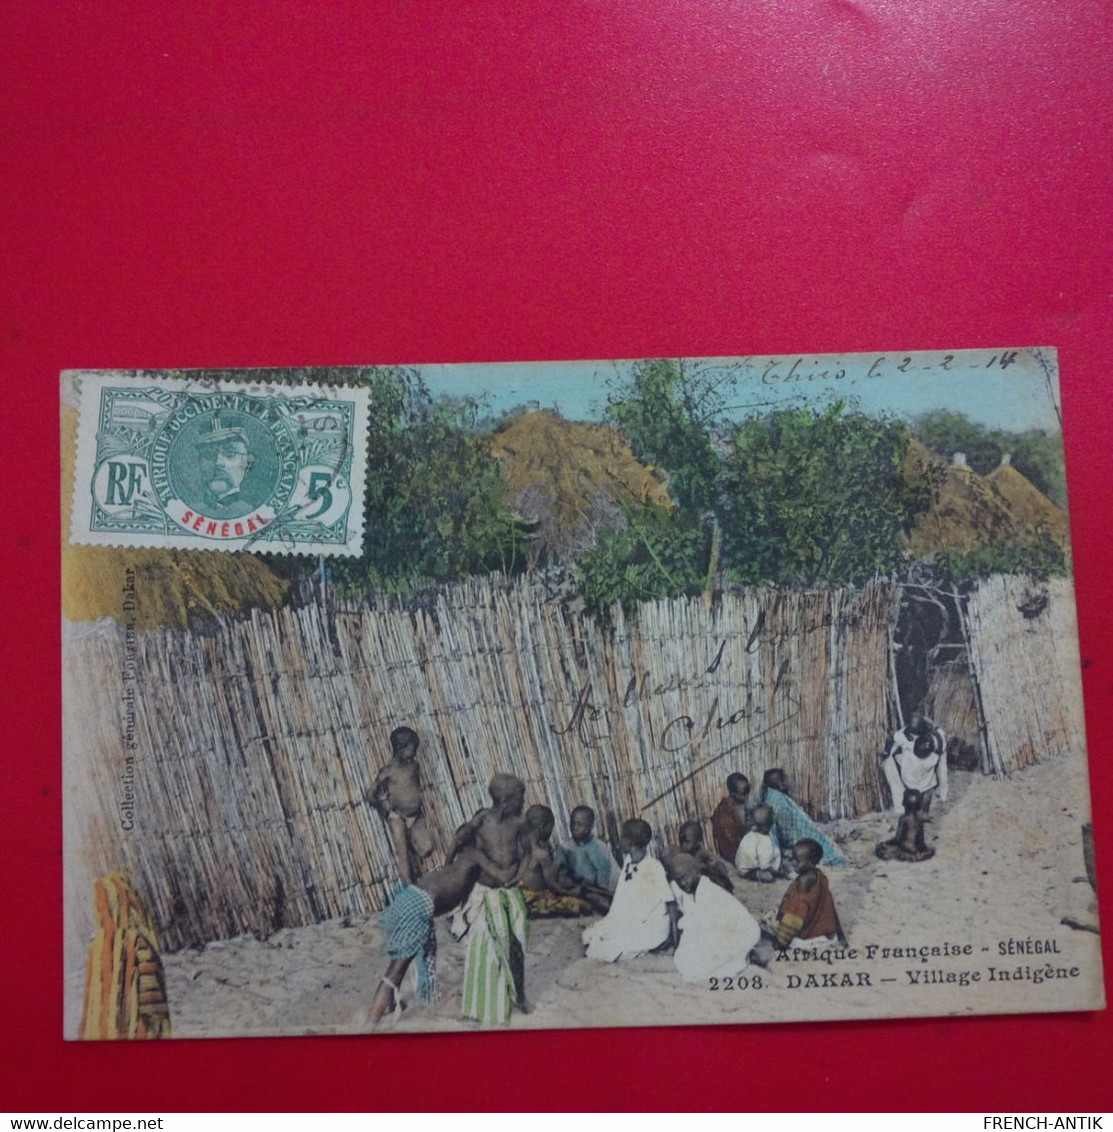 DAKAR VILLAGE INDIGENE - Senegal